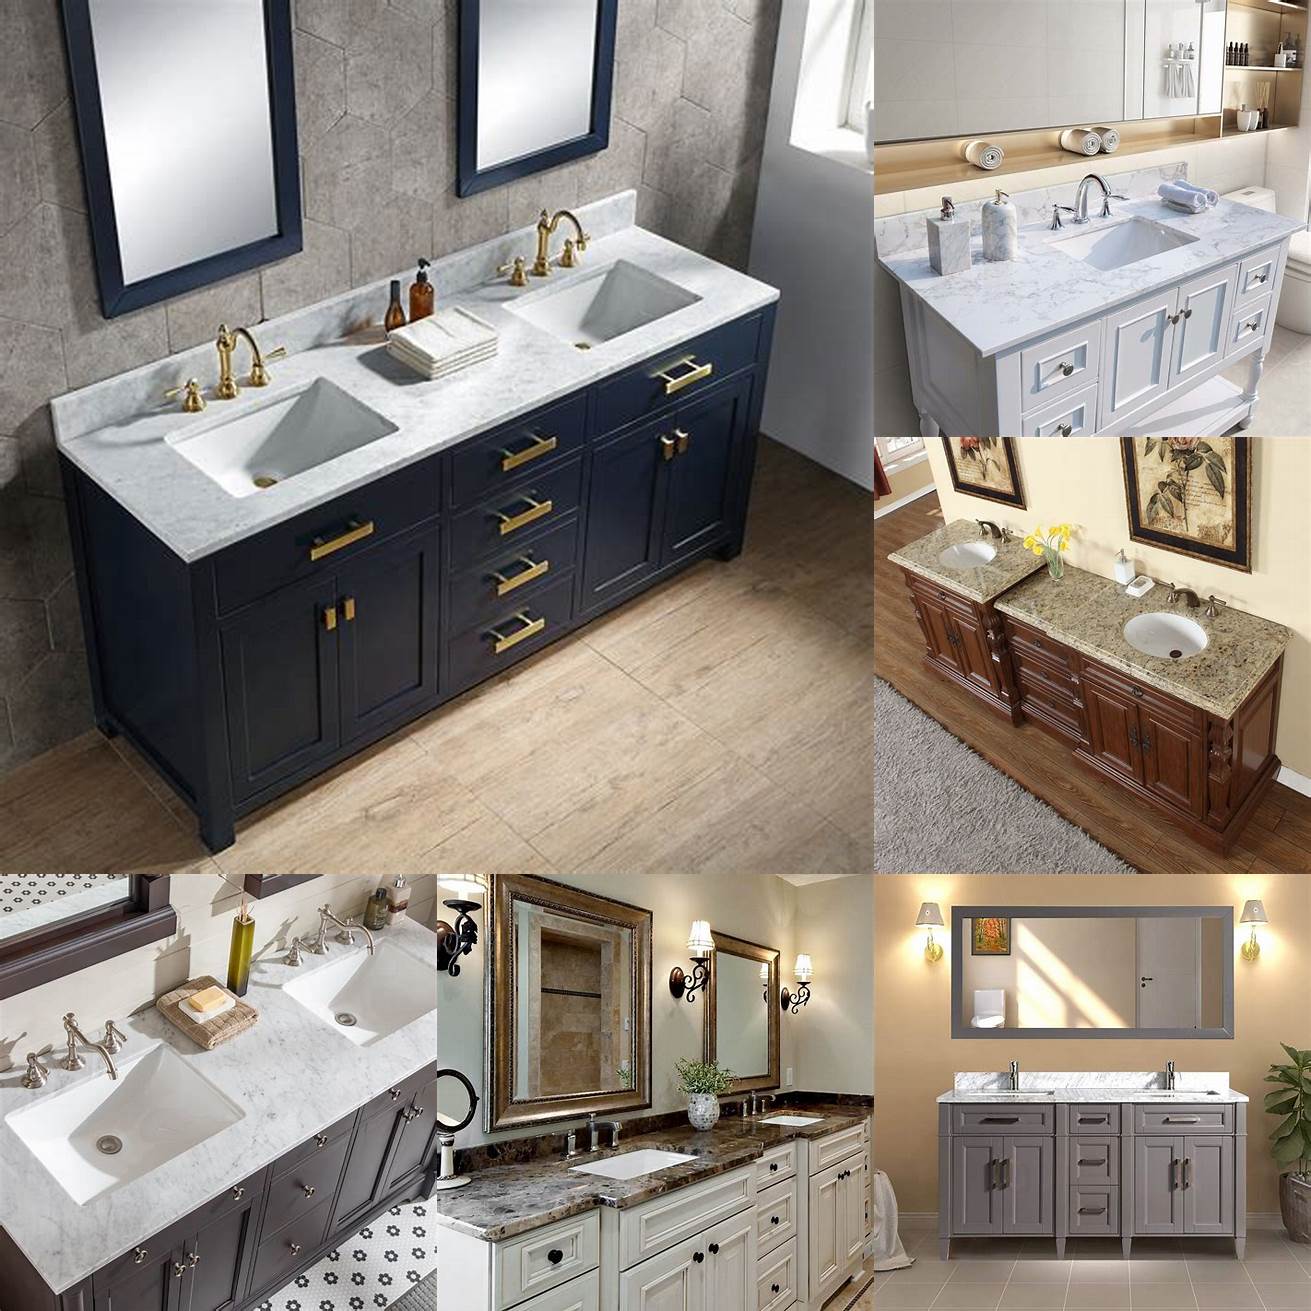 Double sink vanity with marble countertops